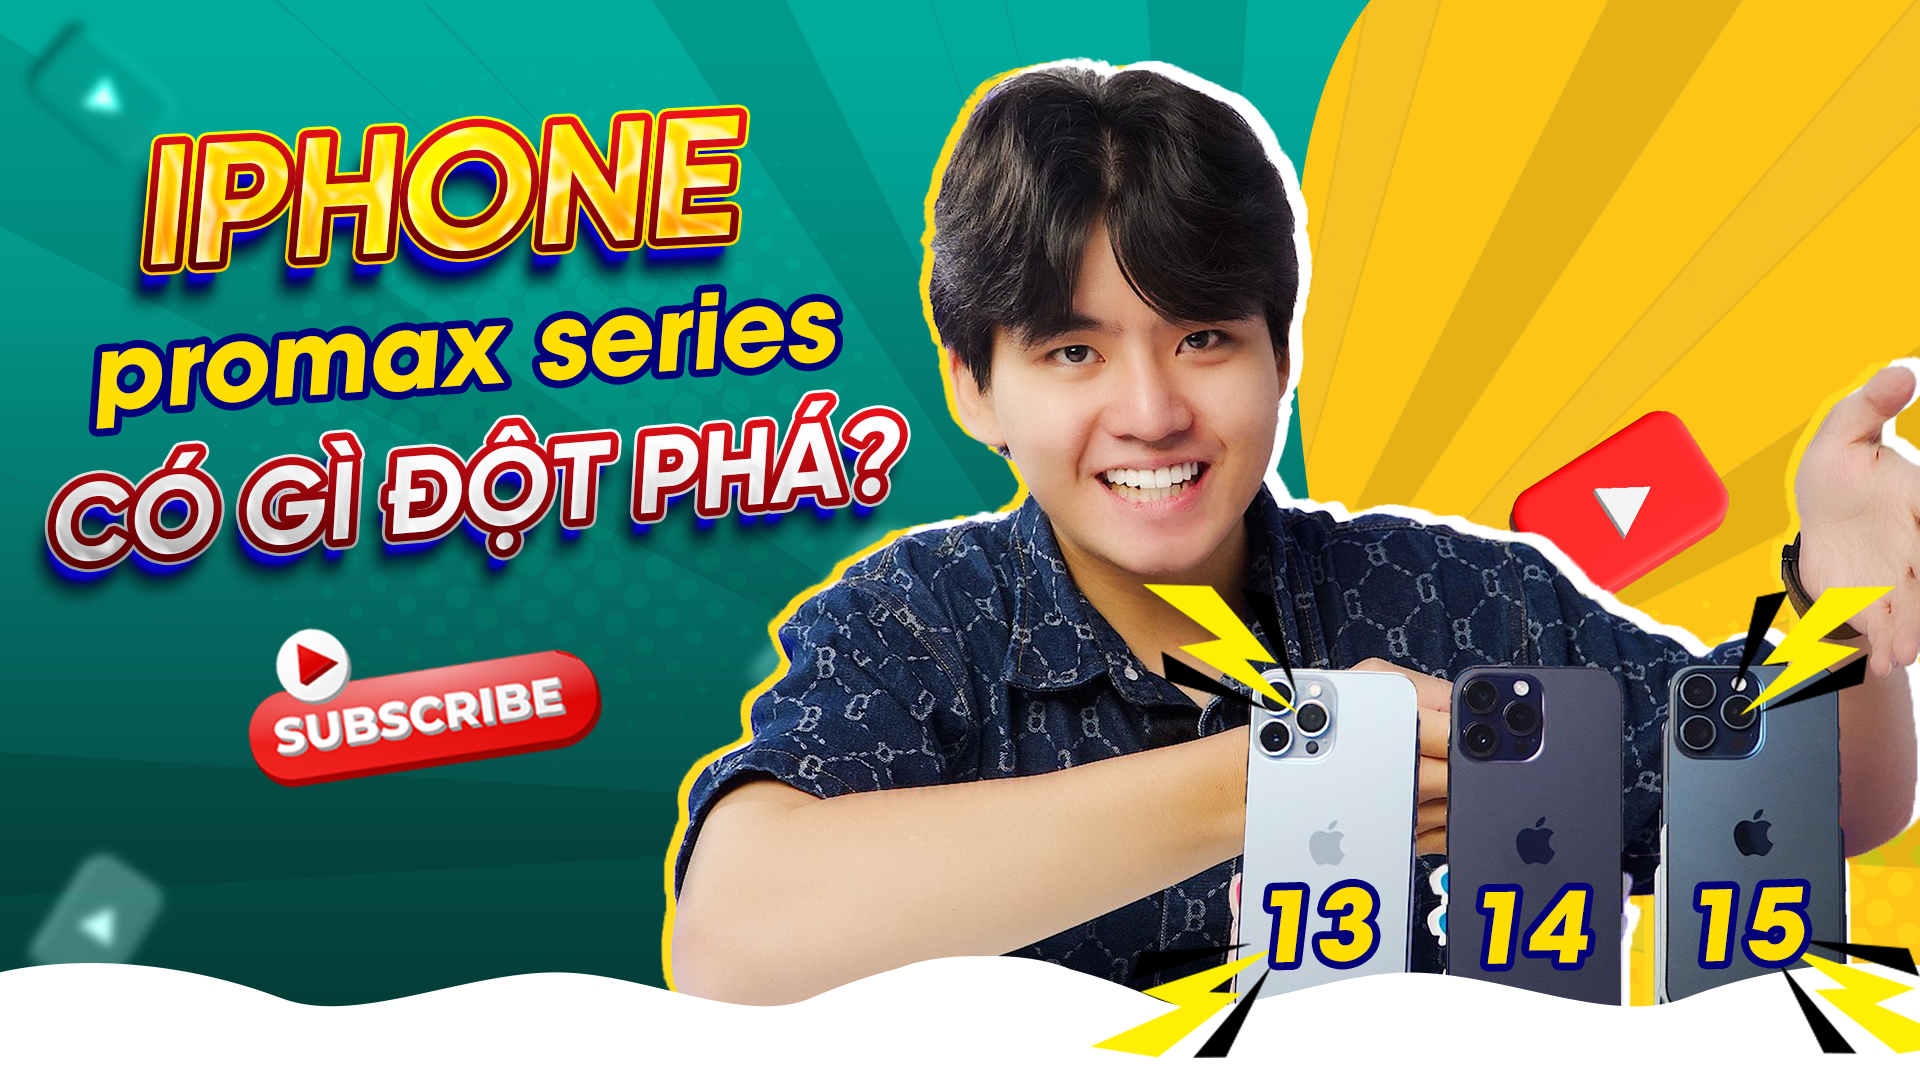 IPhone 15promax vs IPhone 14promax? | Didonghanhphuc.vn #iphone15 #iphone14promax #iphone13promax